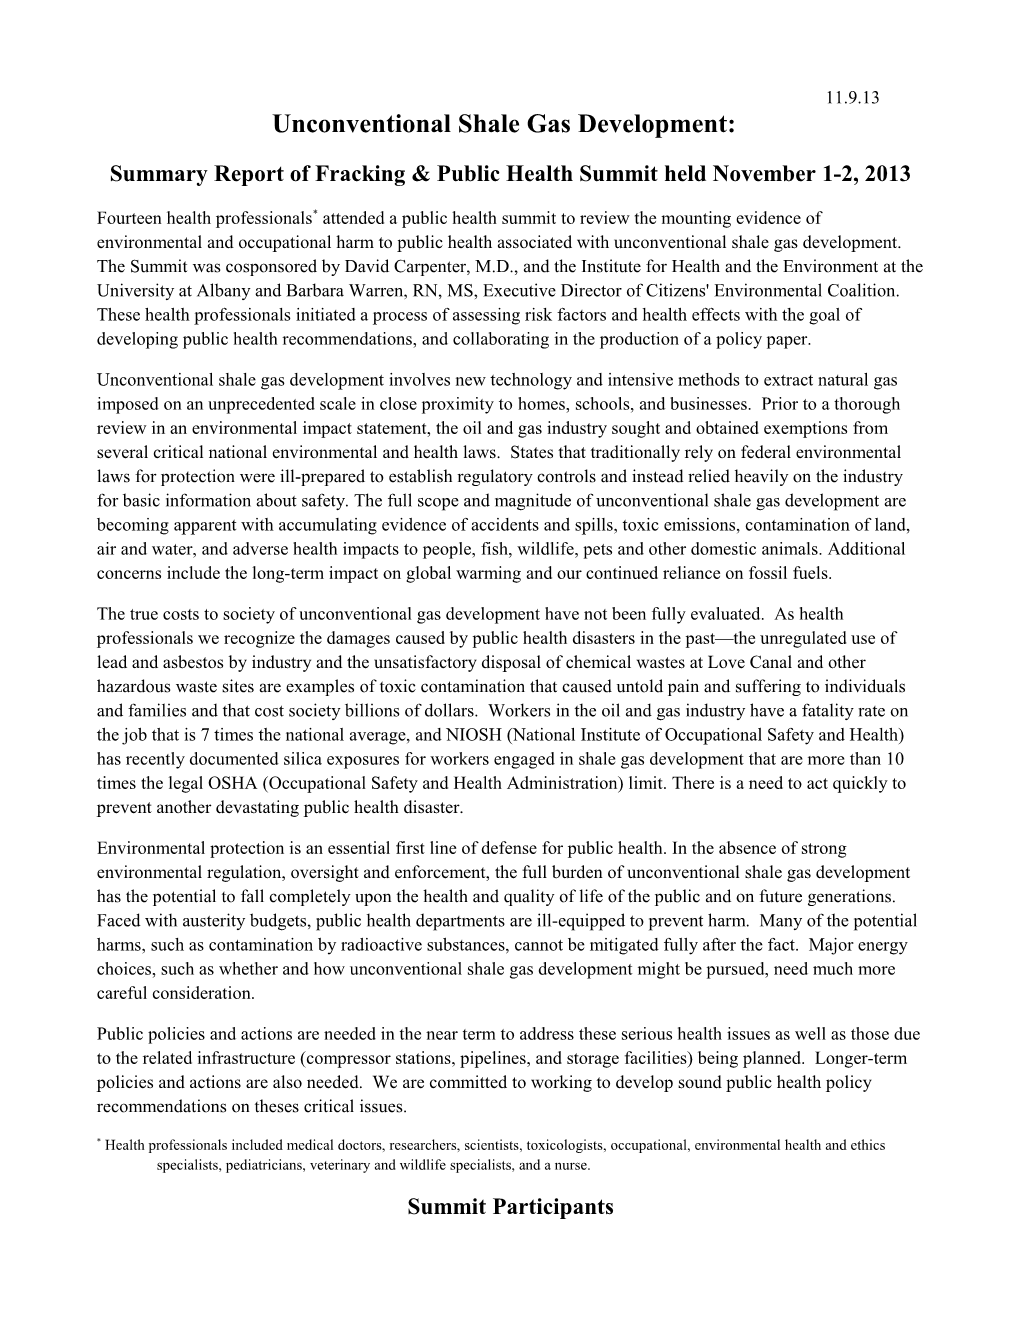 Fracking & Public Health Summit November 1-2, 2013